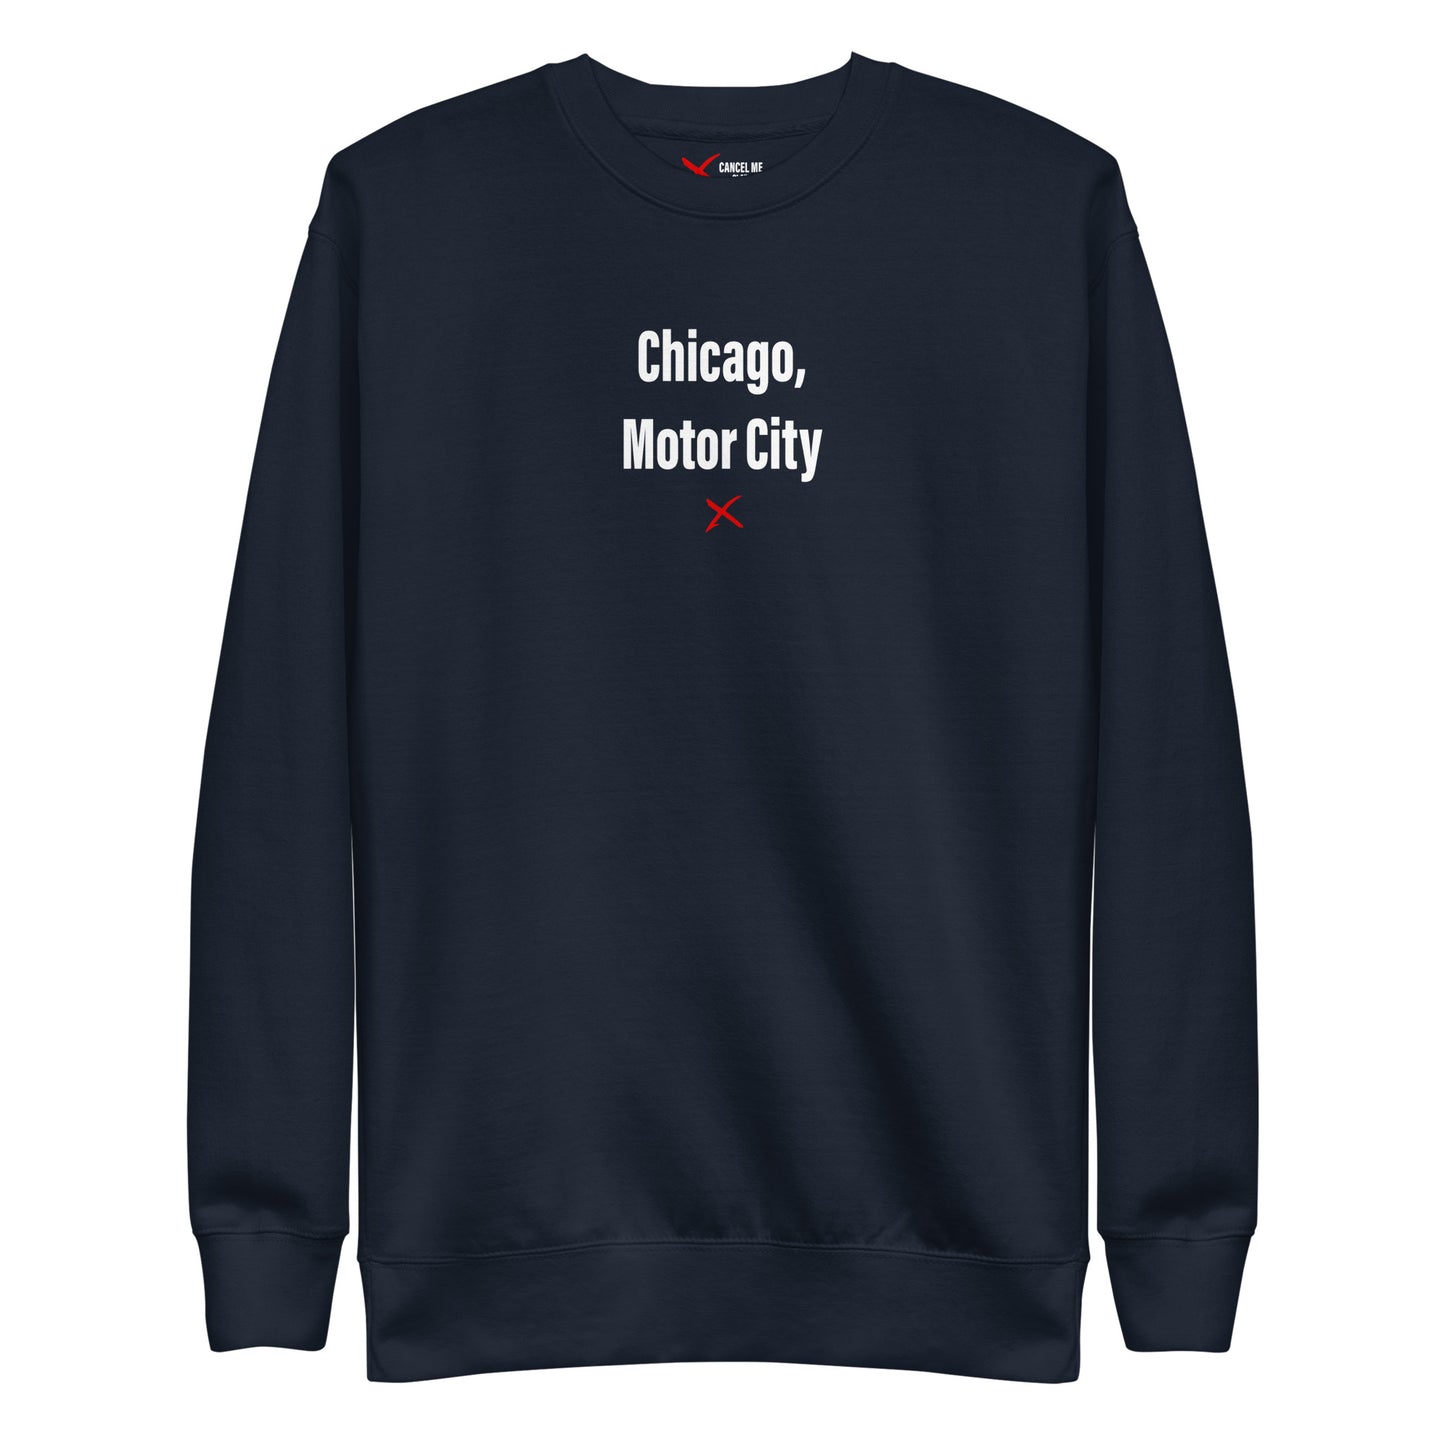 Chicago, Motor City - Sweatshirt